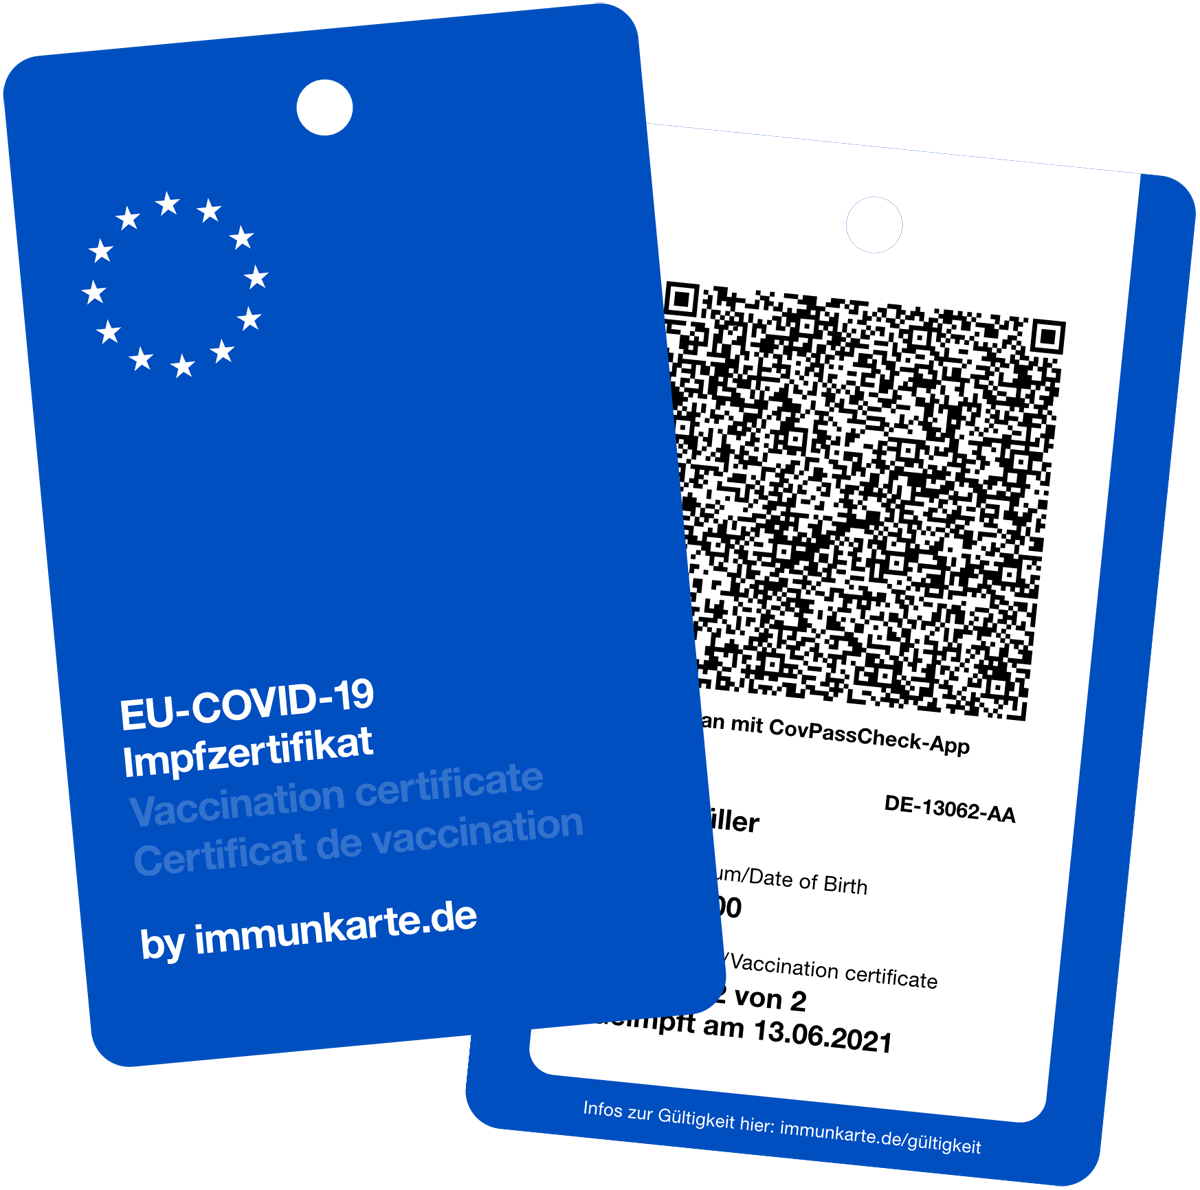 EU-COVID-19 Impfzertifikat by Immunkarte.de